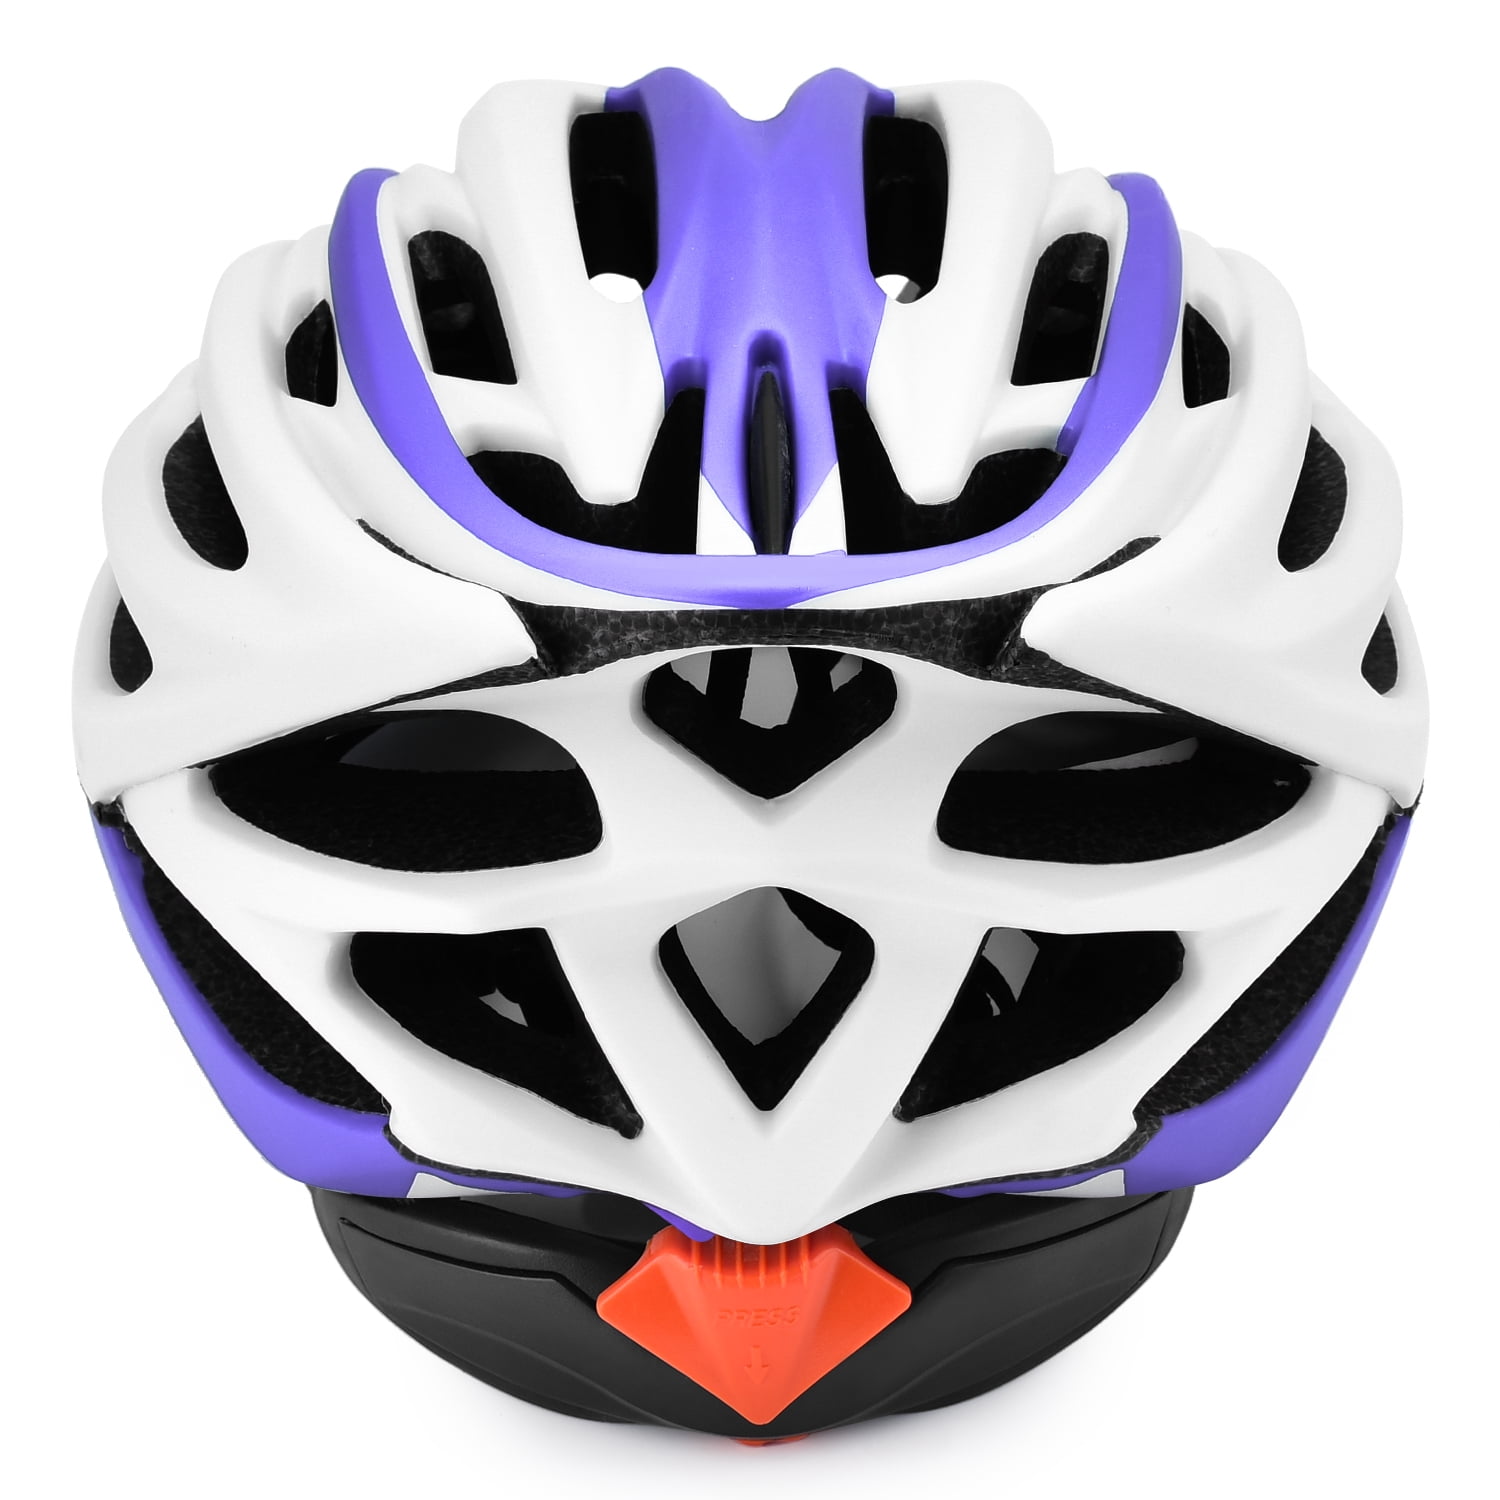 Details about   Cycling Helmet Men Women Mountain Road Bike Bicycle Helmet W/Goggles Visor NEW 